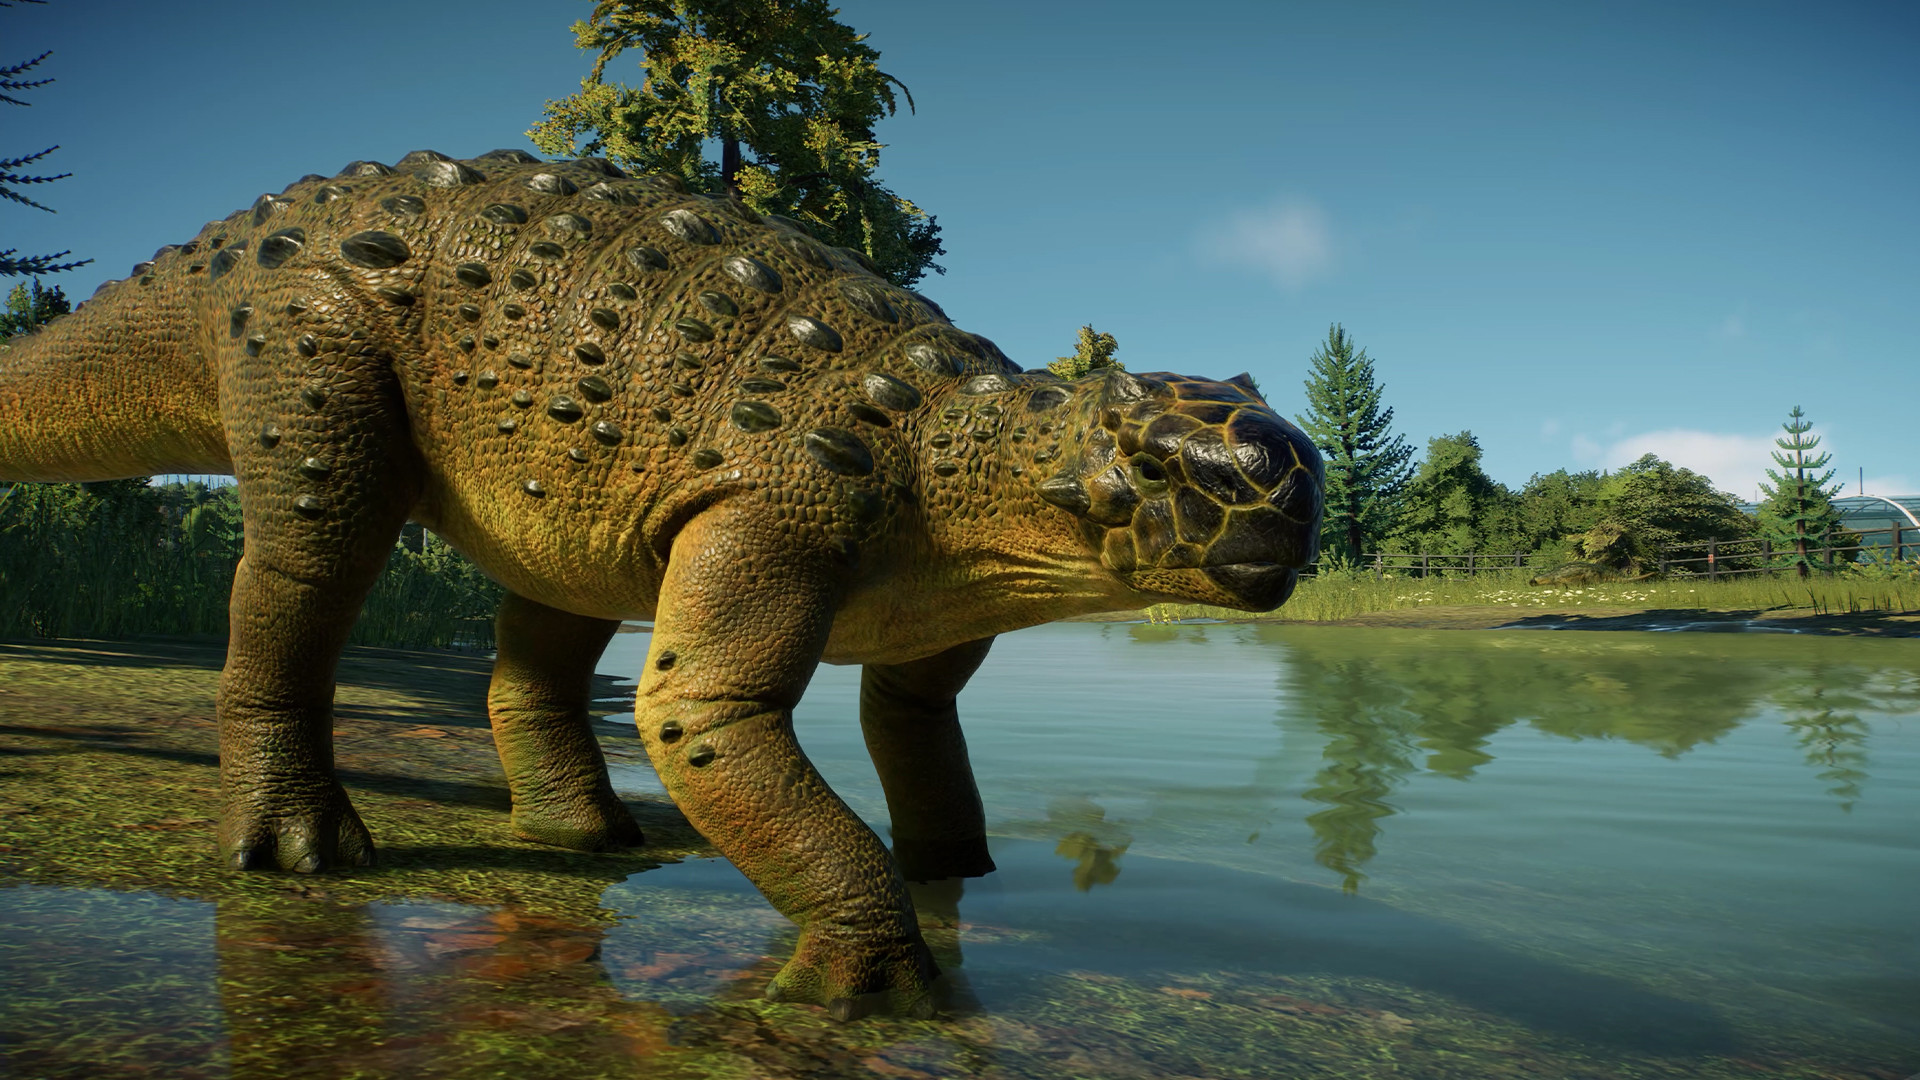 Jurassic World Evolution 2 - Early Cretaceous Pack DLC Steam CD Key